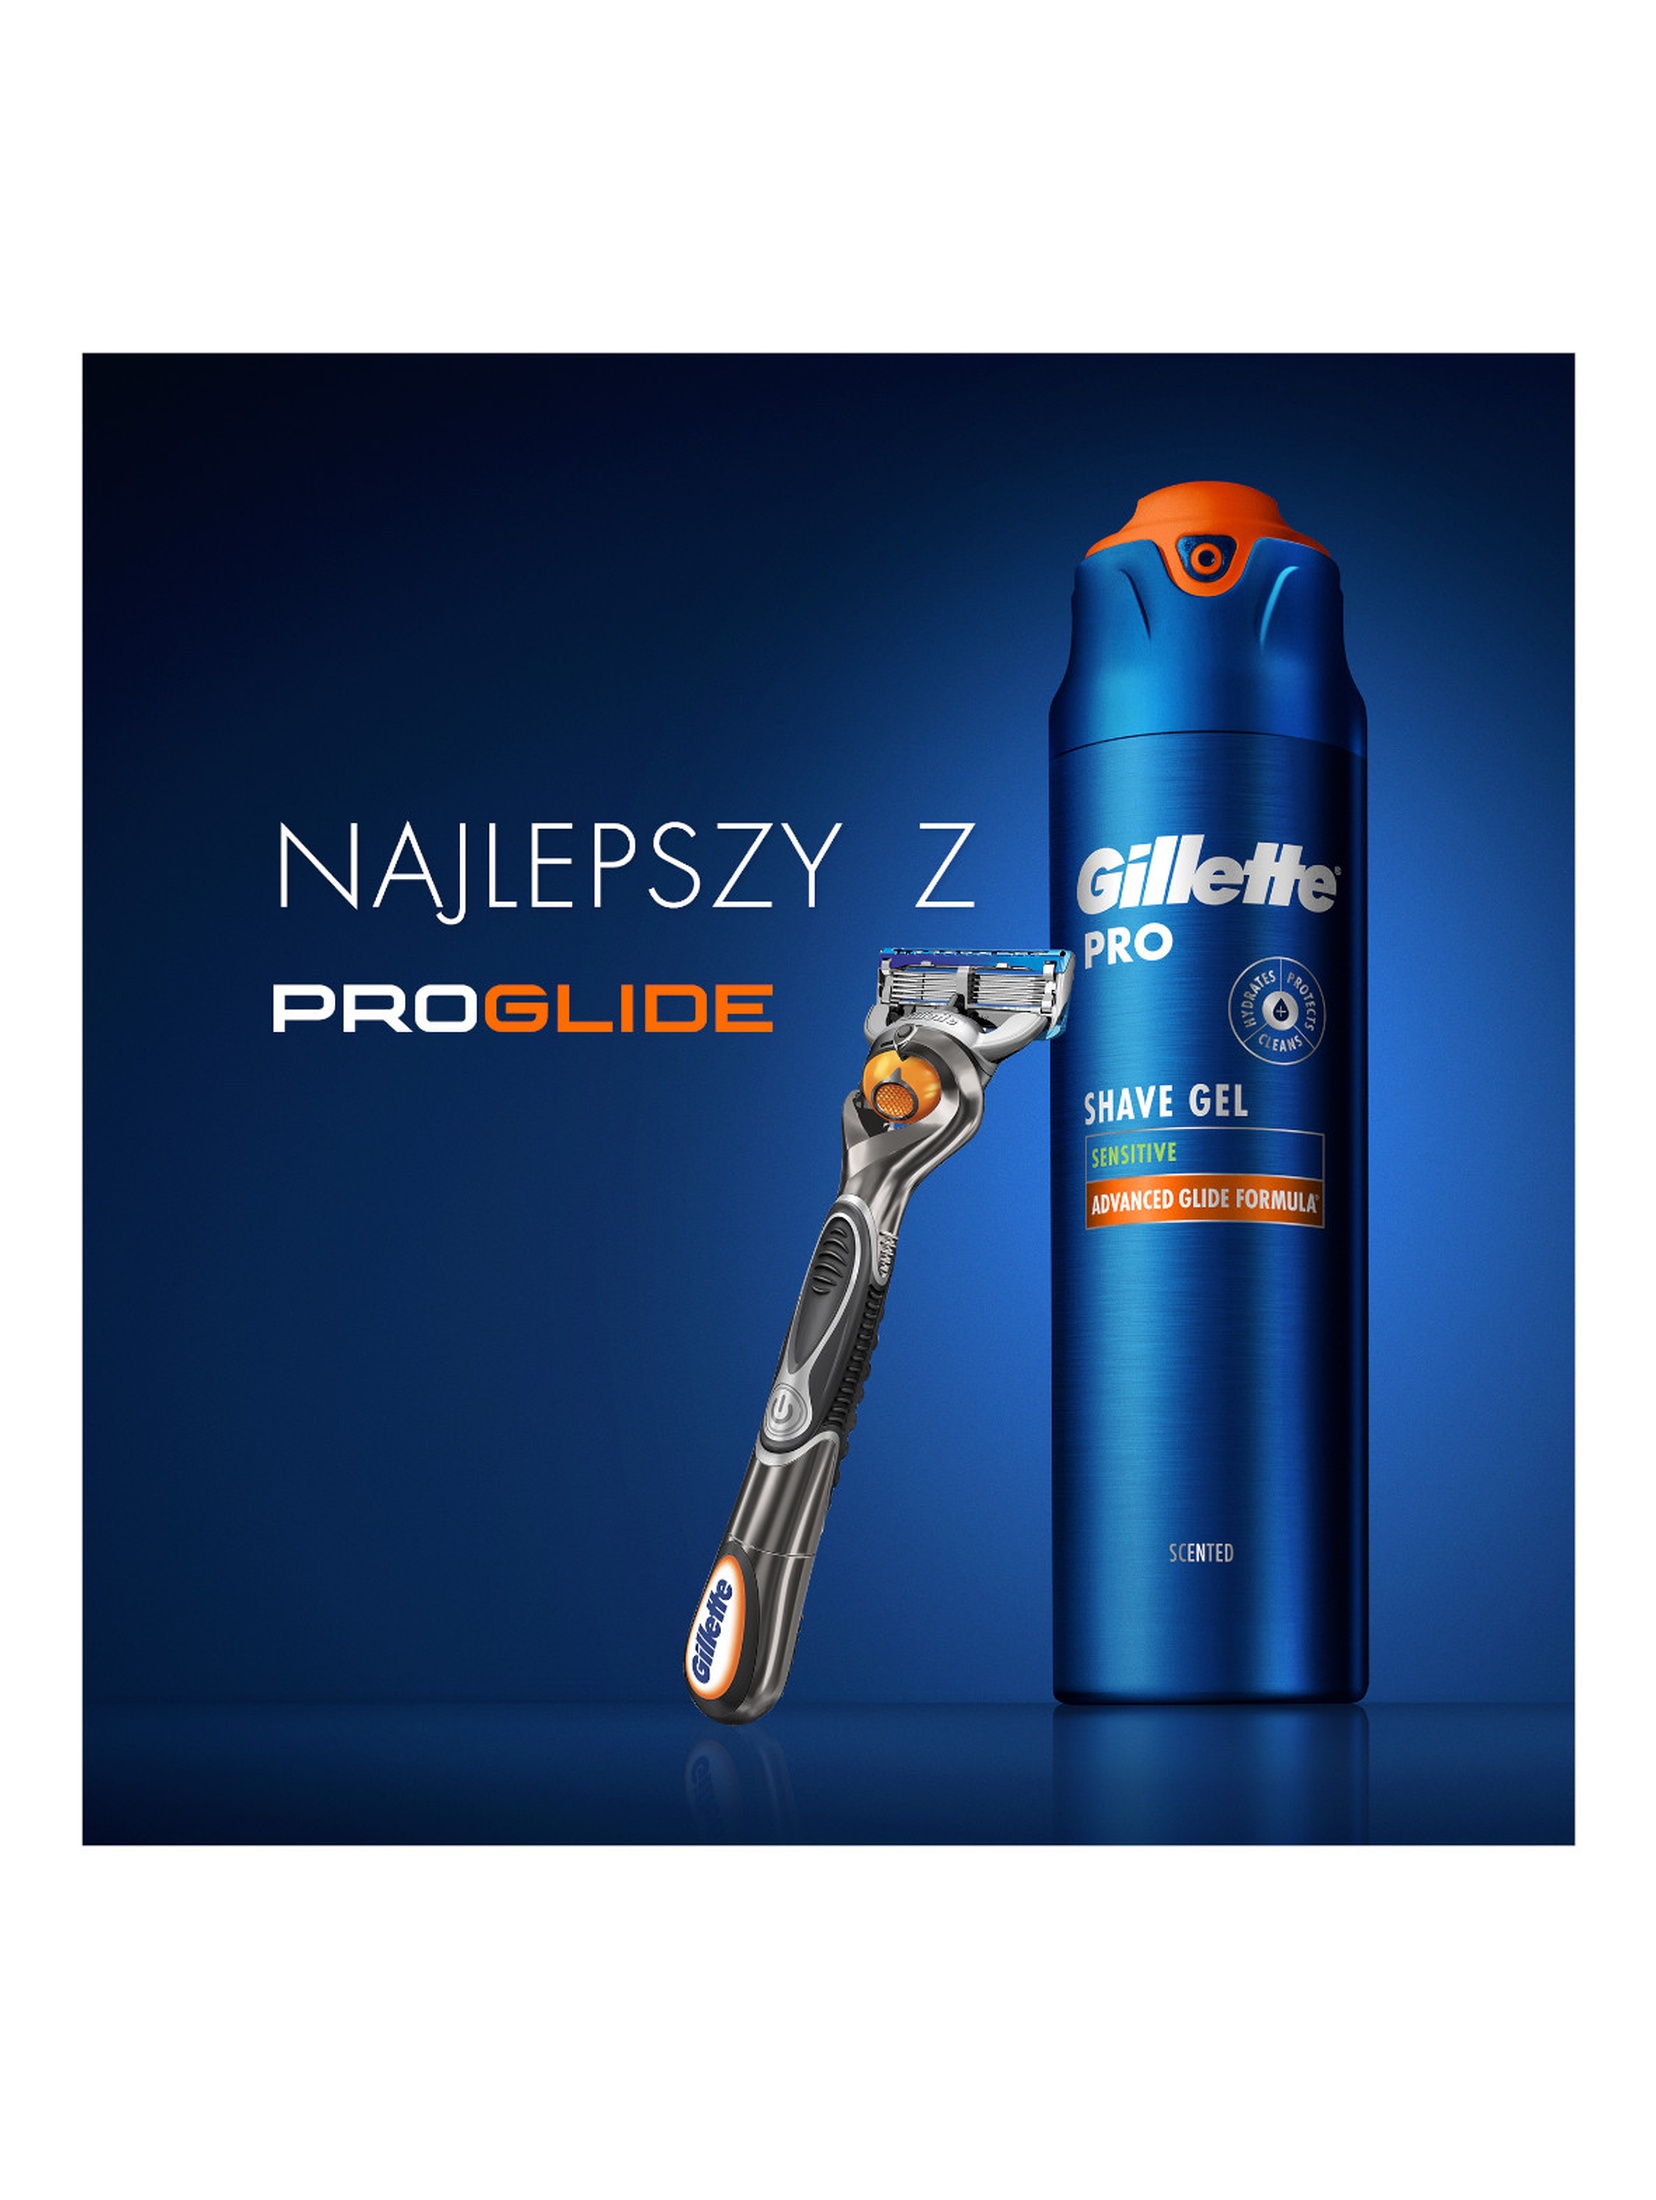 Gillette Pro Żel do golenia 200ml